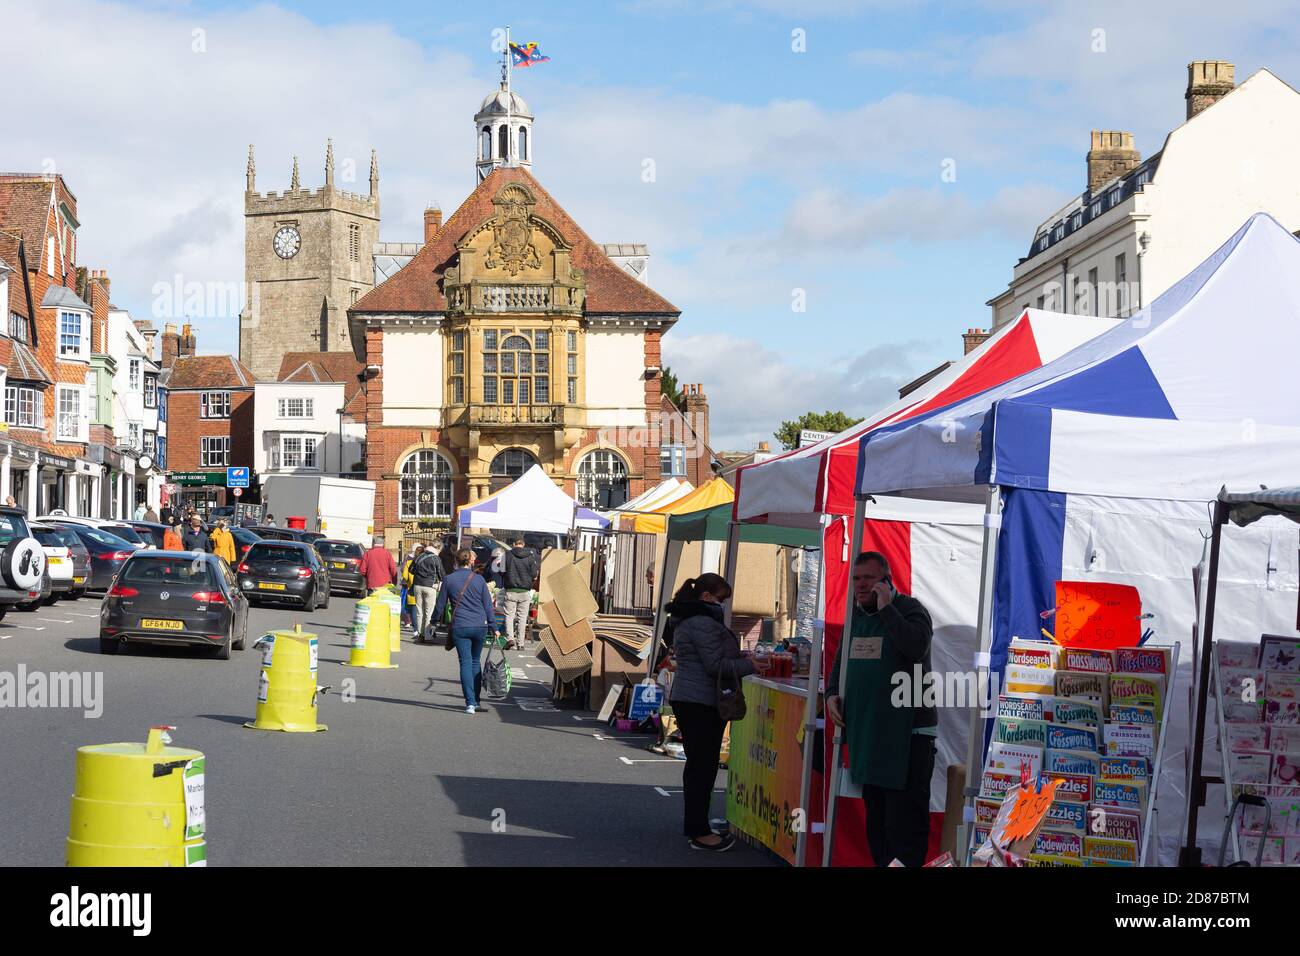 Stalls on The Charter Market, High Street, Marlborough, Wiltshire, England, United Kingdom Stock Photo